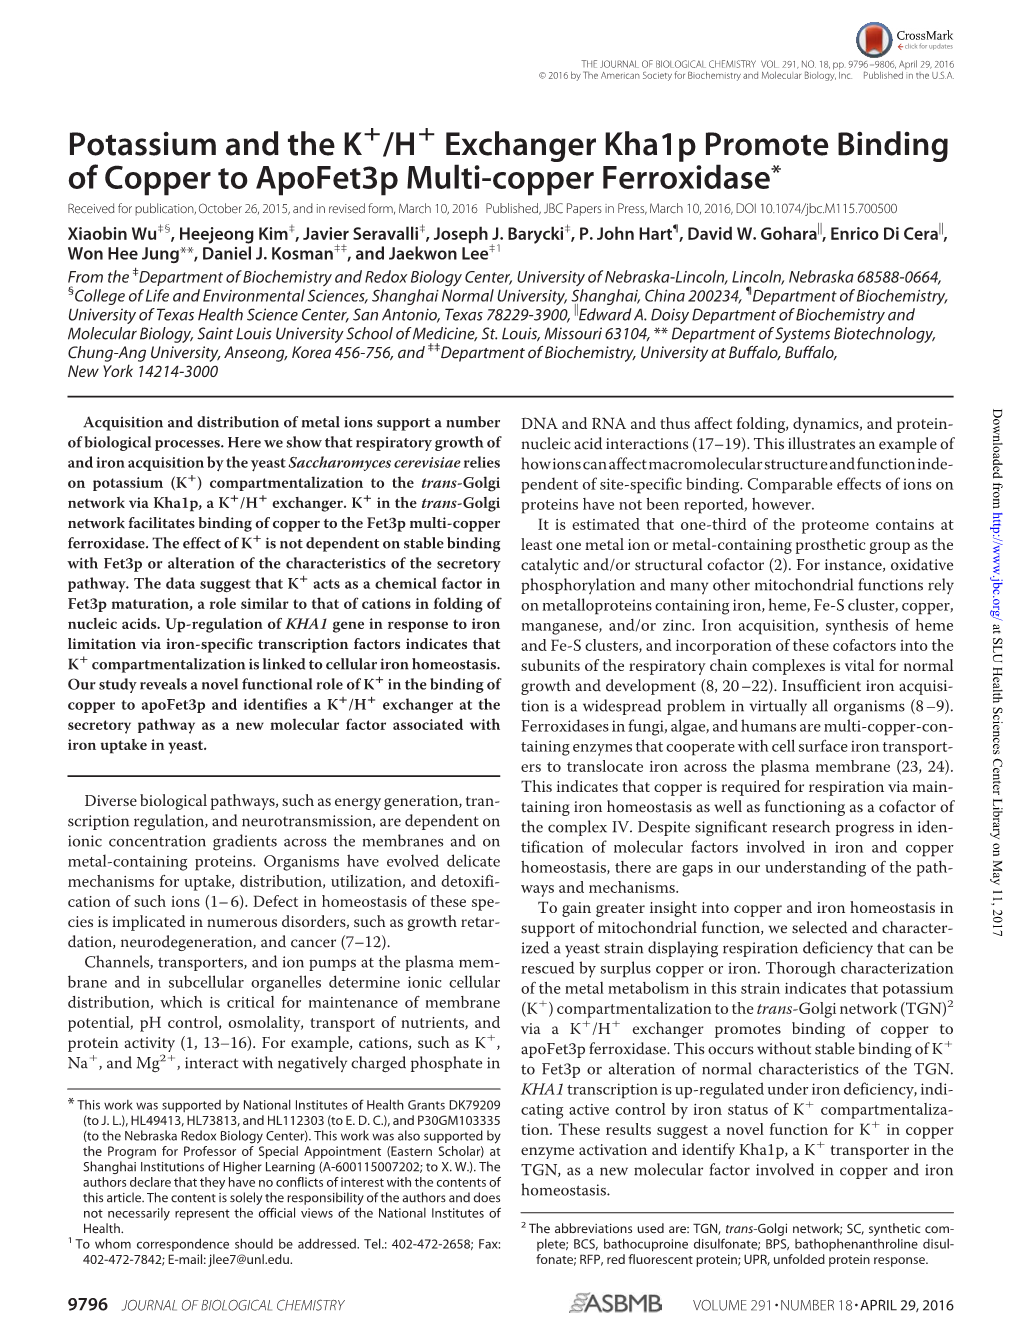 Potassium and the K+/H+ Exchanger Kha1p Promote Binding of Copper to Apofet3p Multi-Copper Ferroxidase Xiaobin Wu, Heejeong Kim, Javier Seravalli, Joseph J